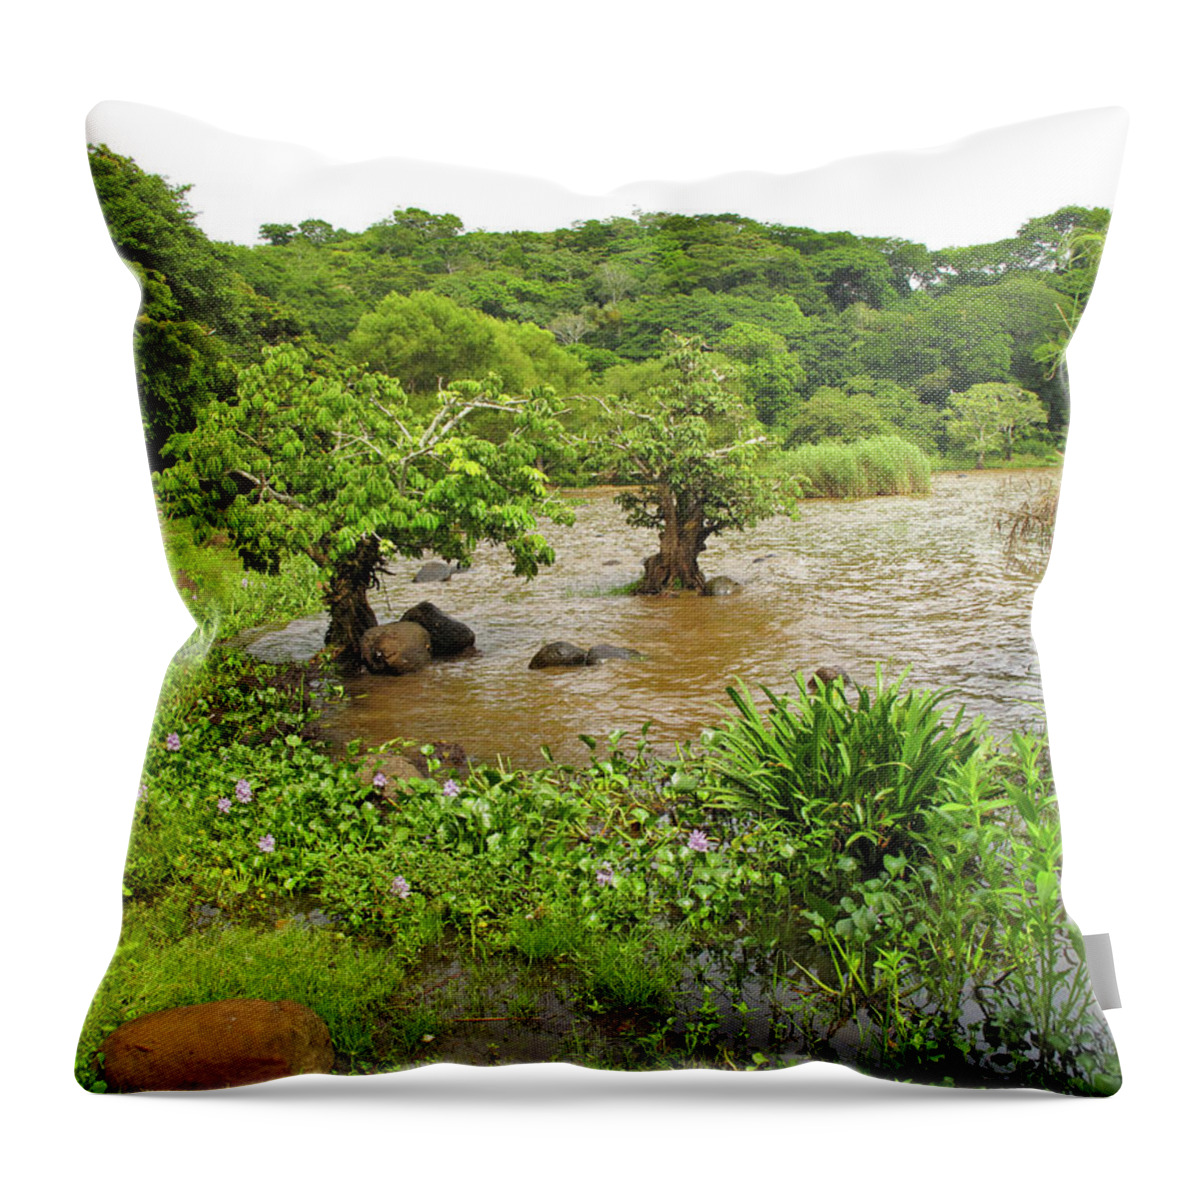 Marshland Throw Pillow featuring the mixed media Marshland on shore of Lake Catemaco by Lorena Cassady